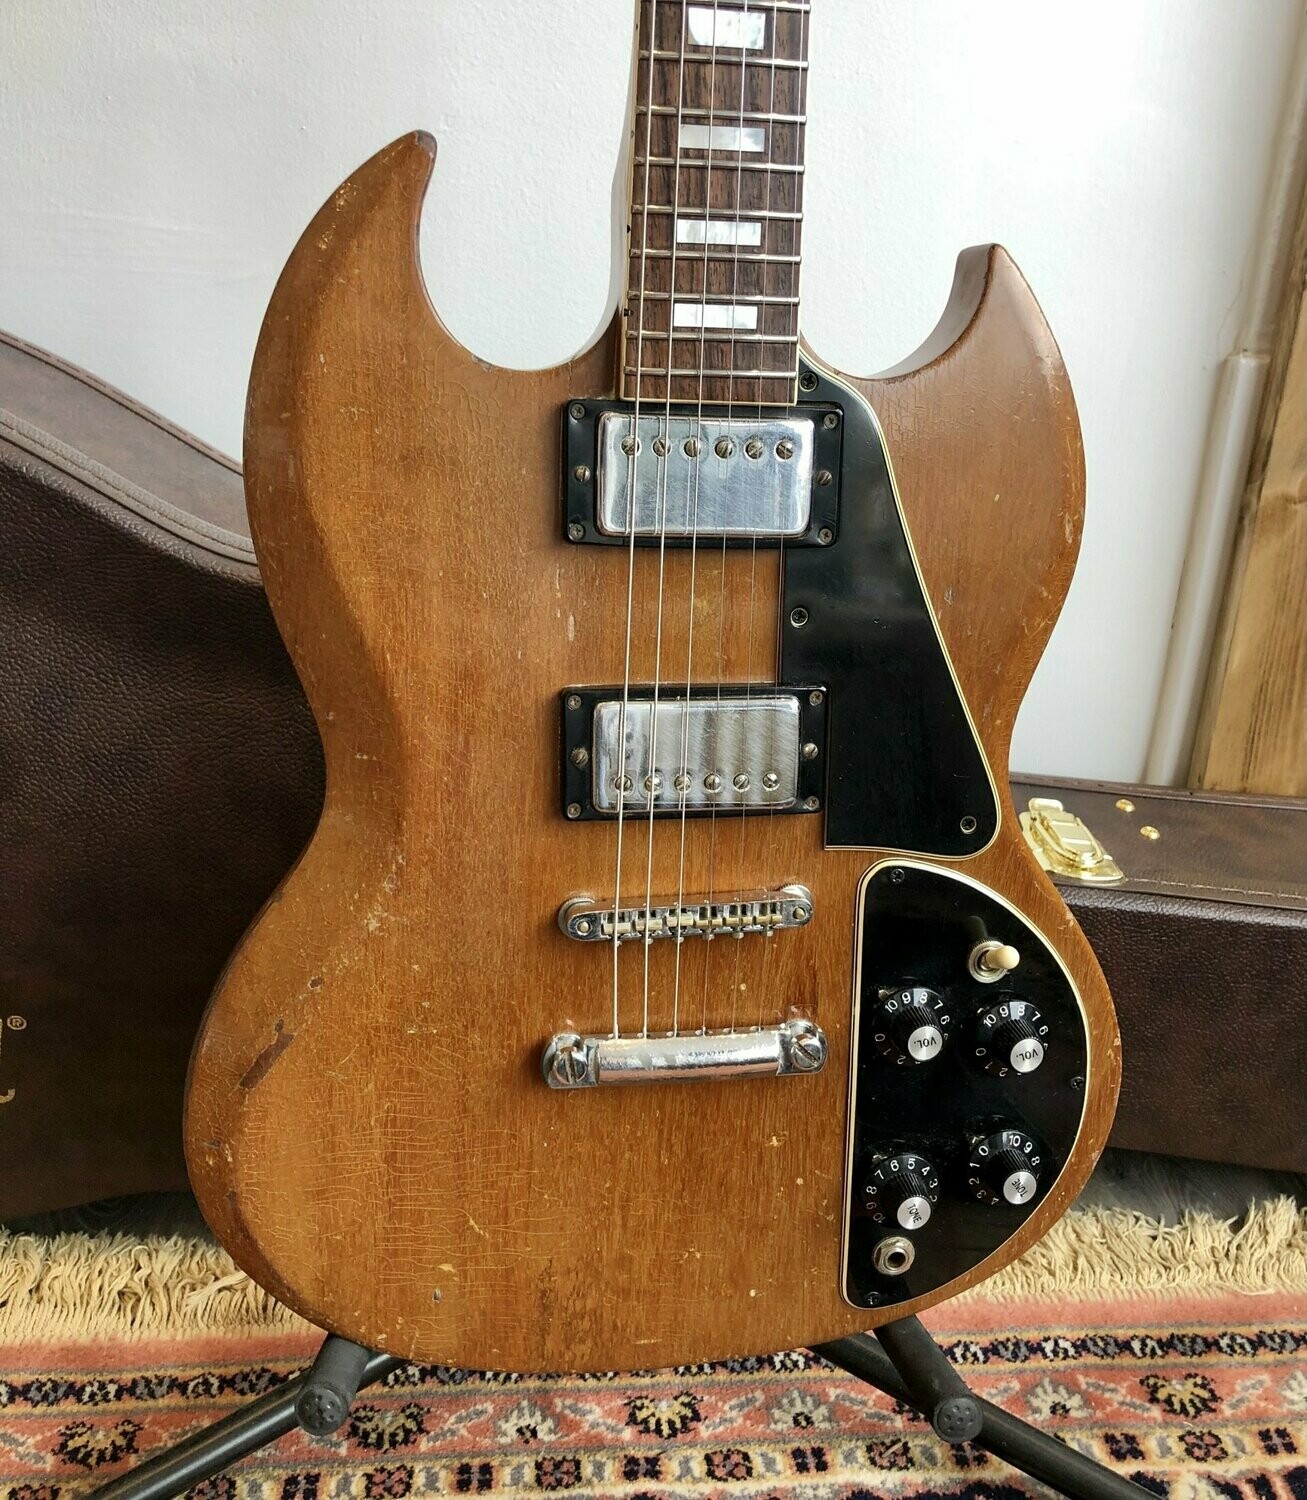 1971 Gibson SG Deluxe electric guitar